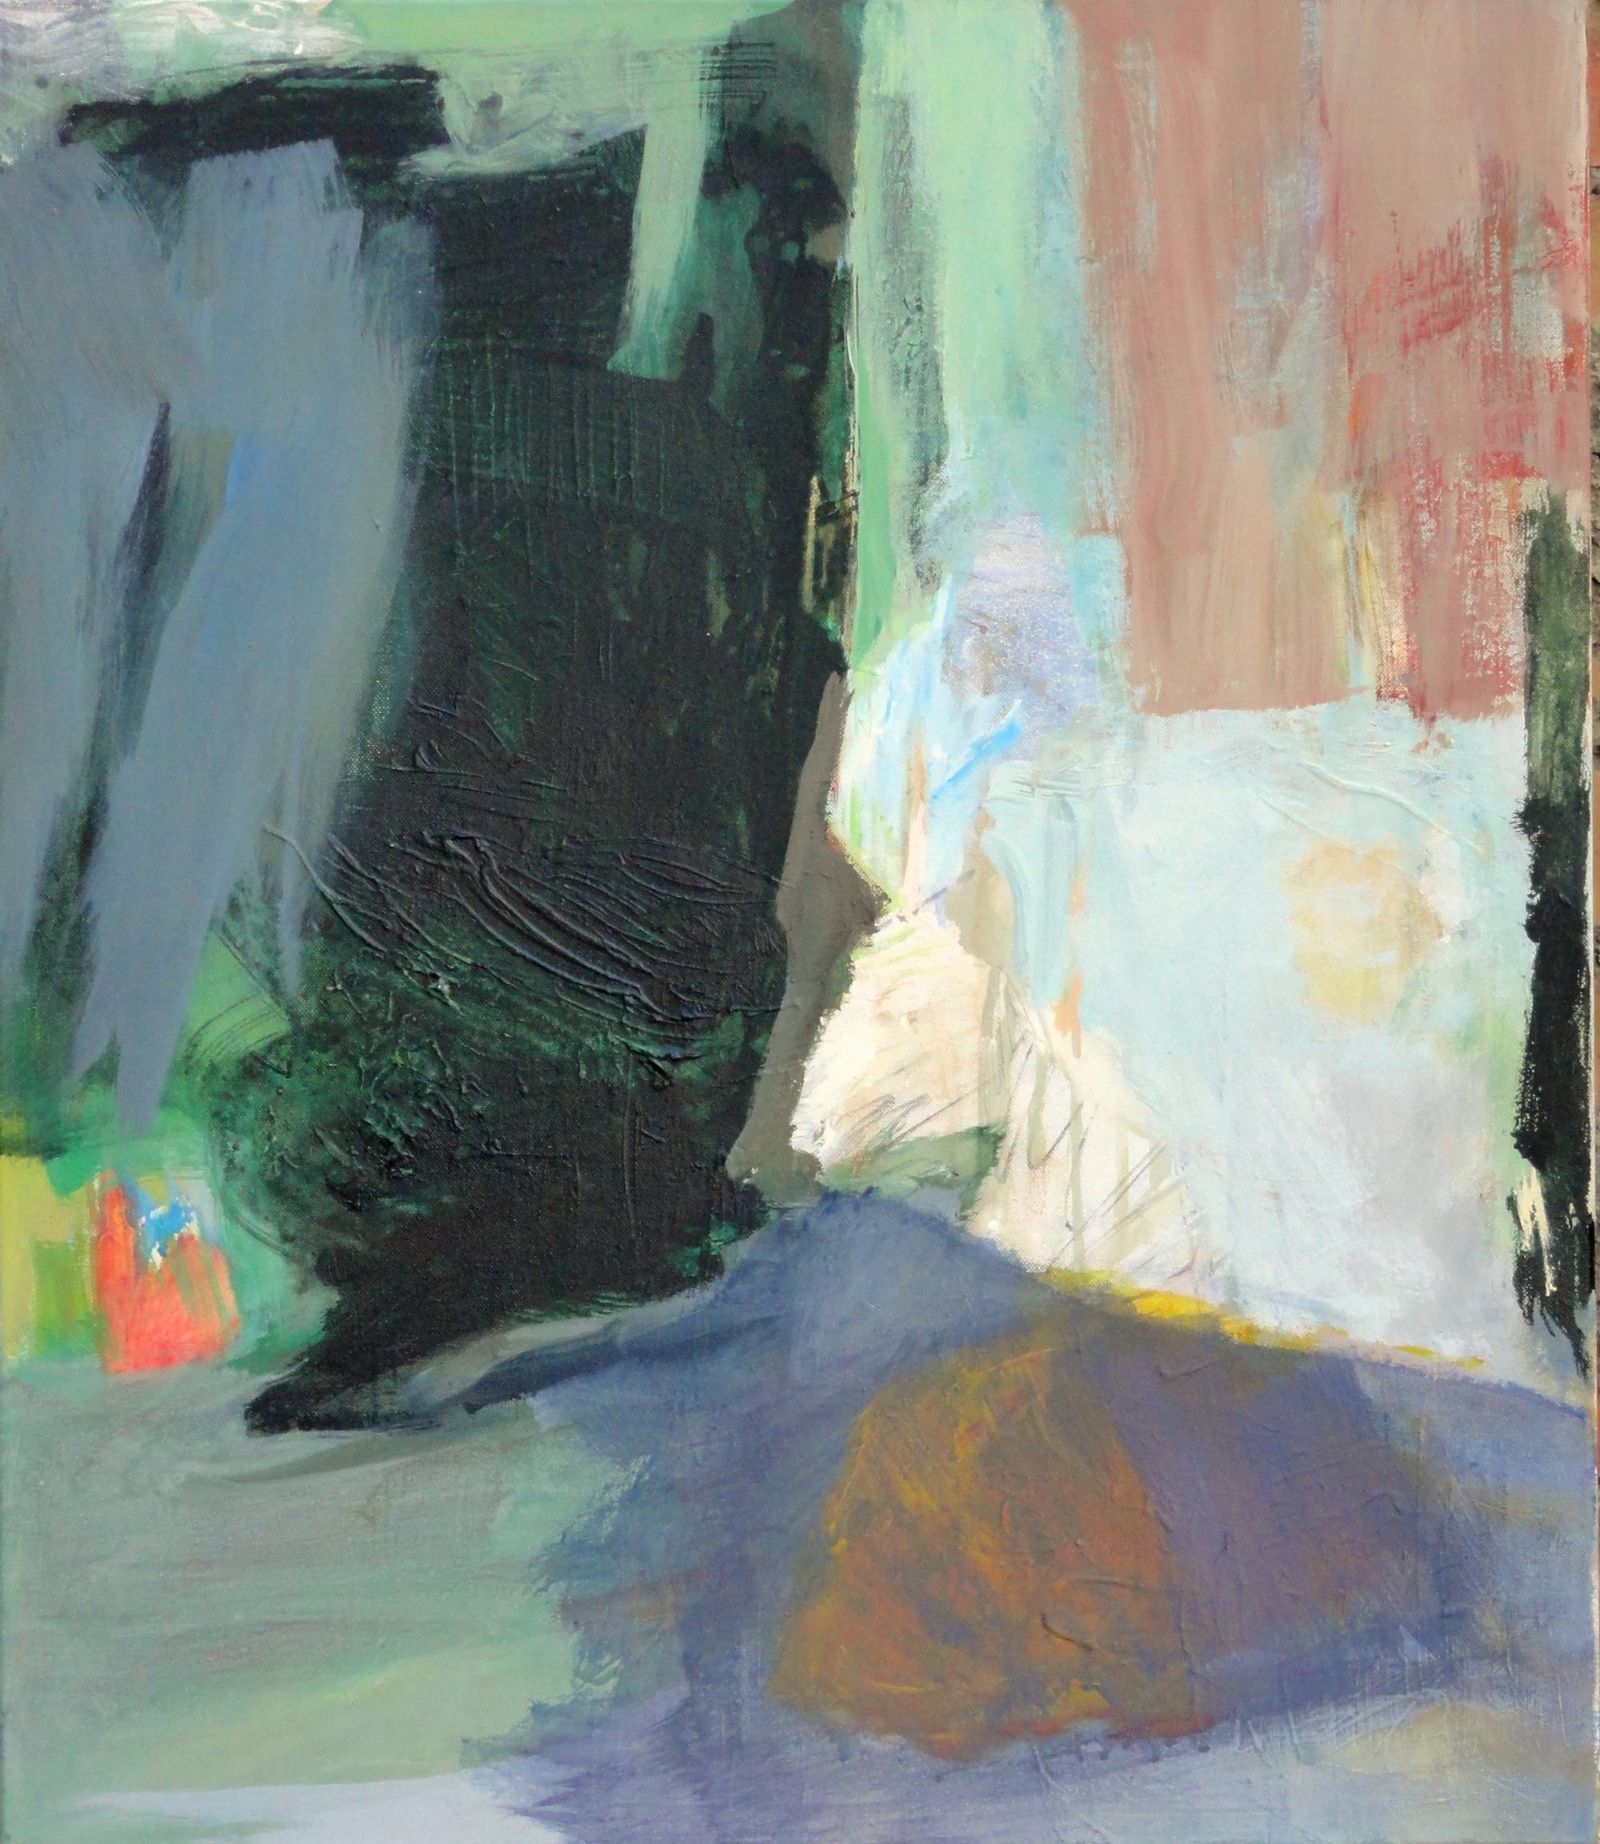 "Atemwende", 2015. Acryl auf Leinwand, 70 x 60 cm